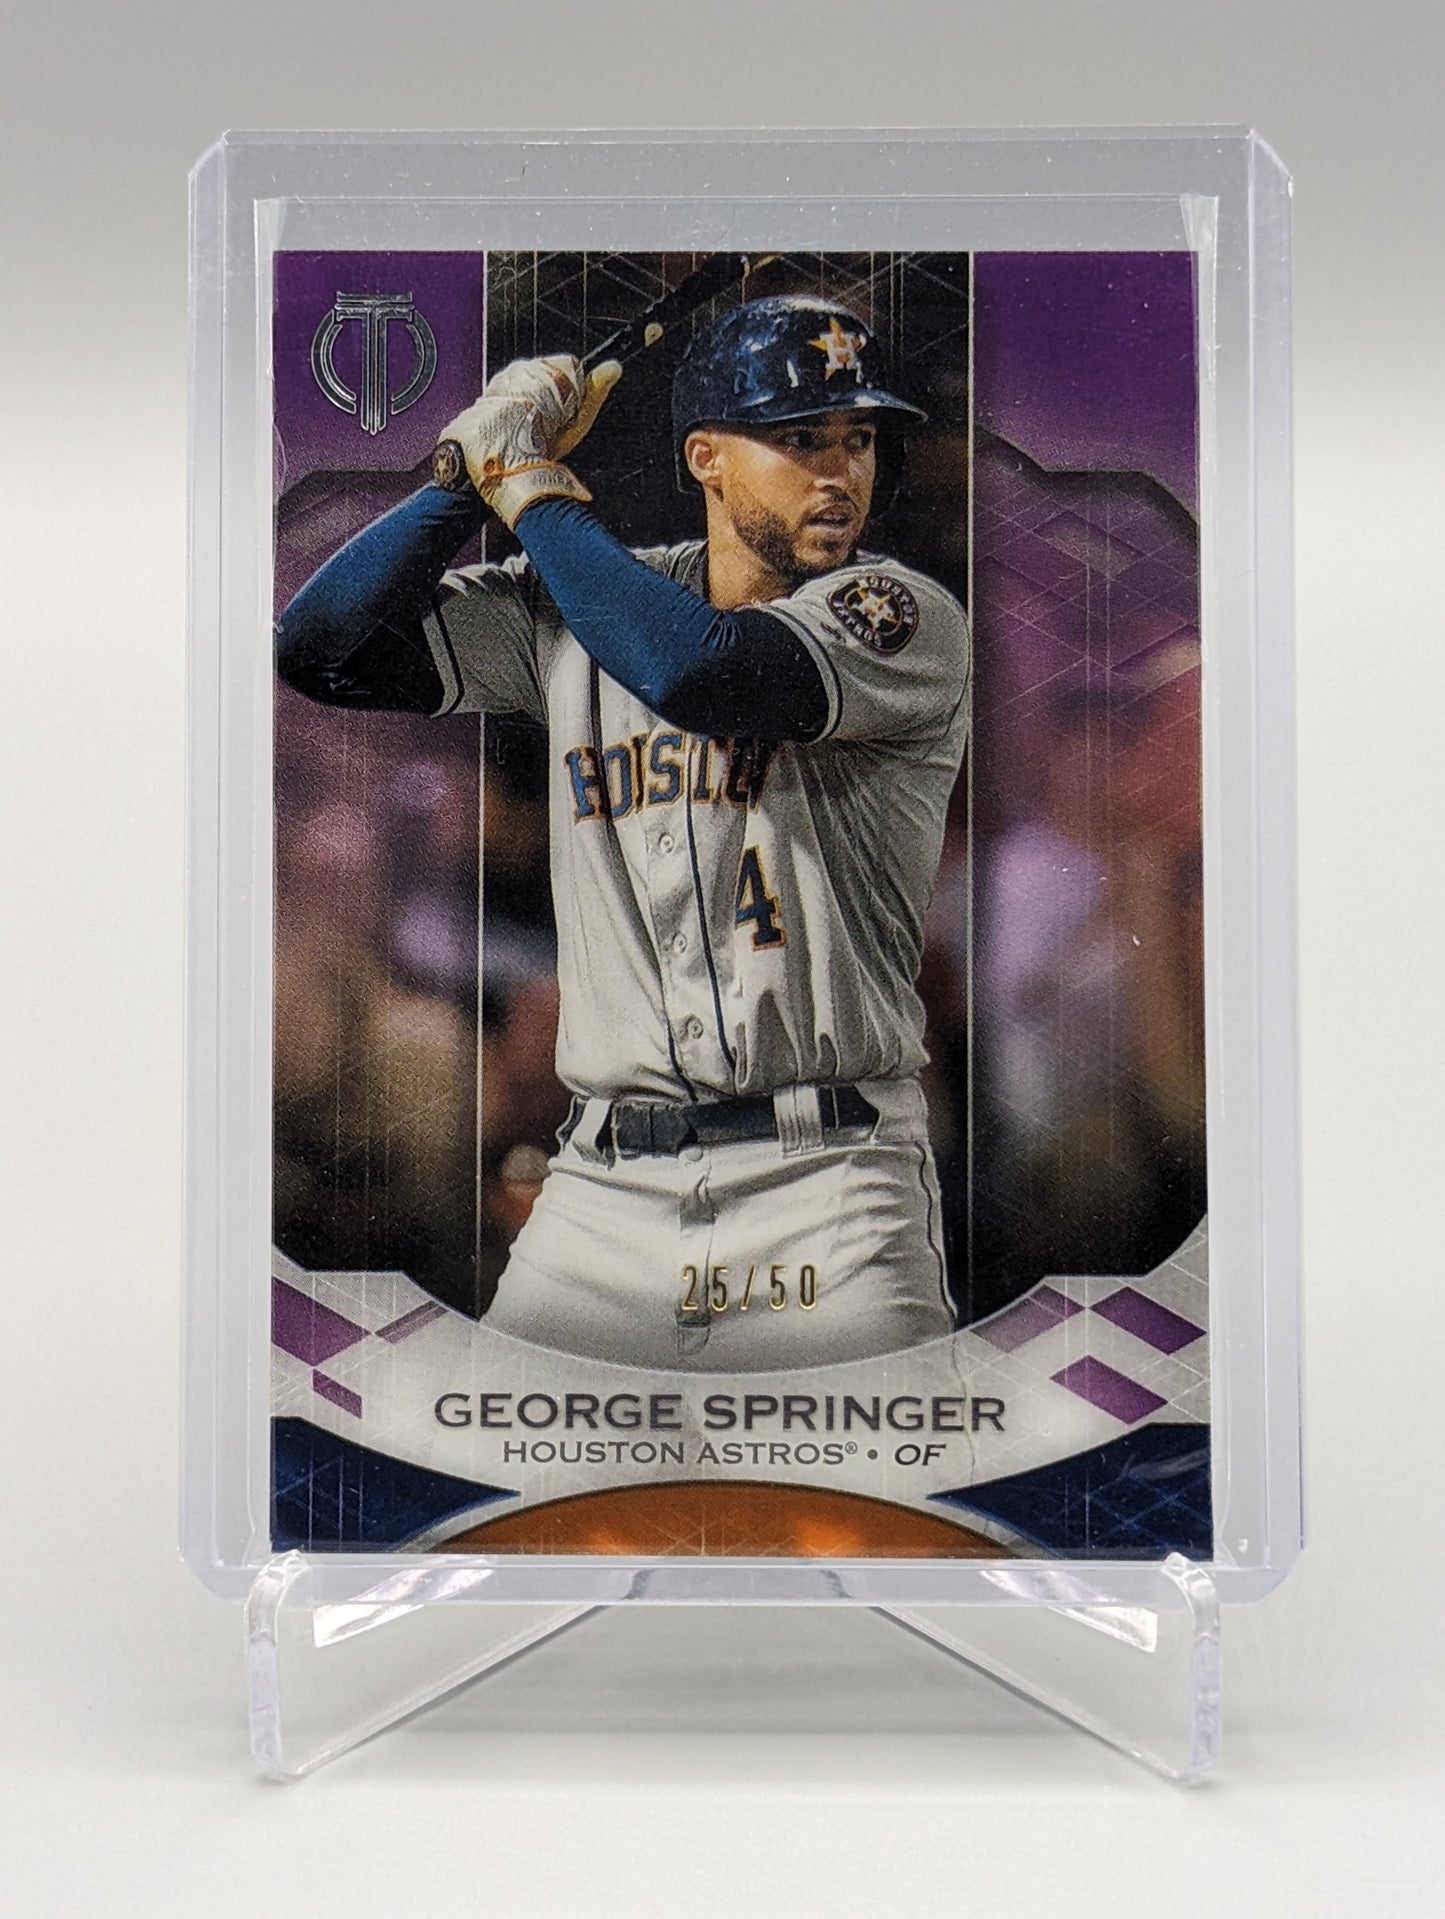 2019 Topps Tribute Purple #53 George Springer #/50 Astros